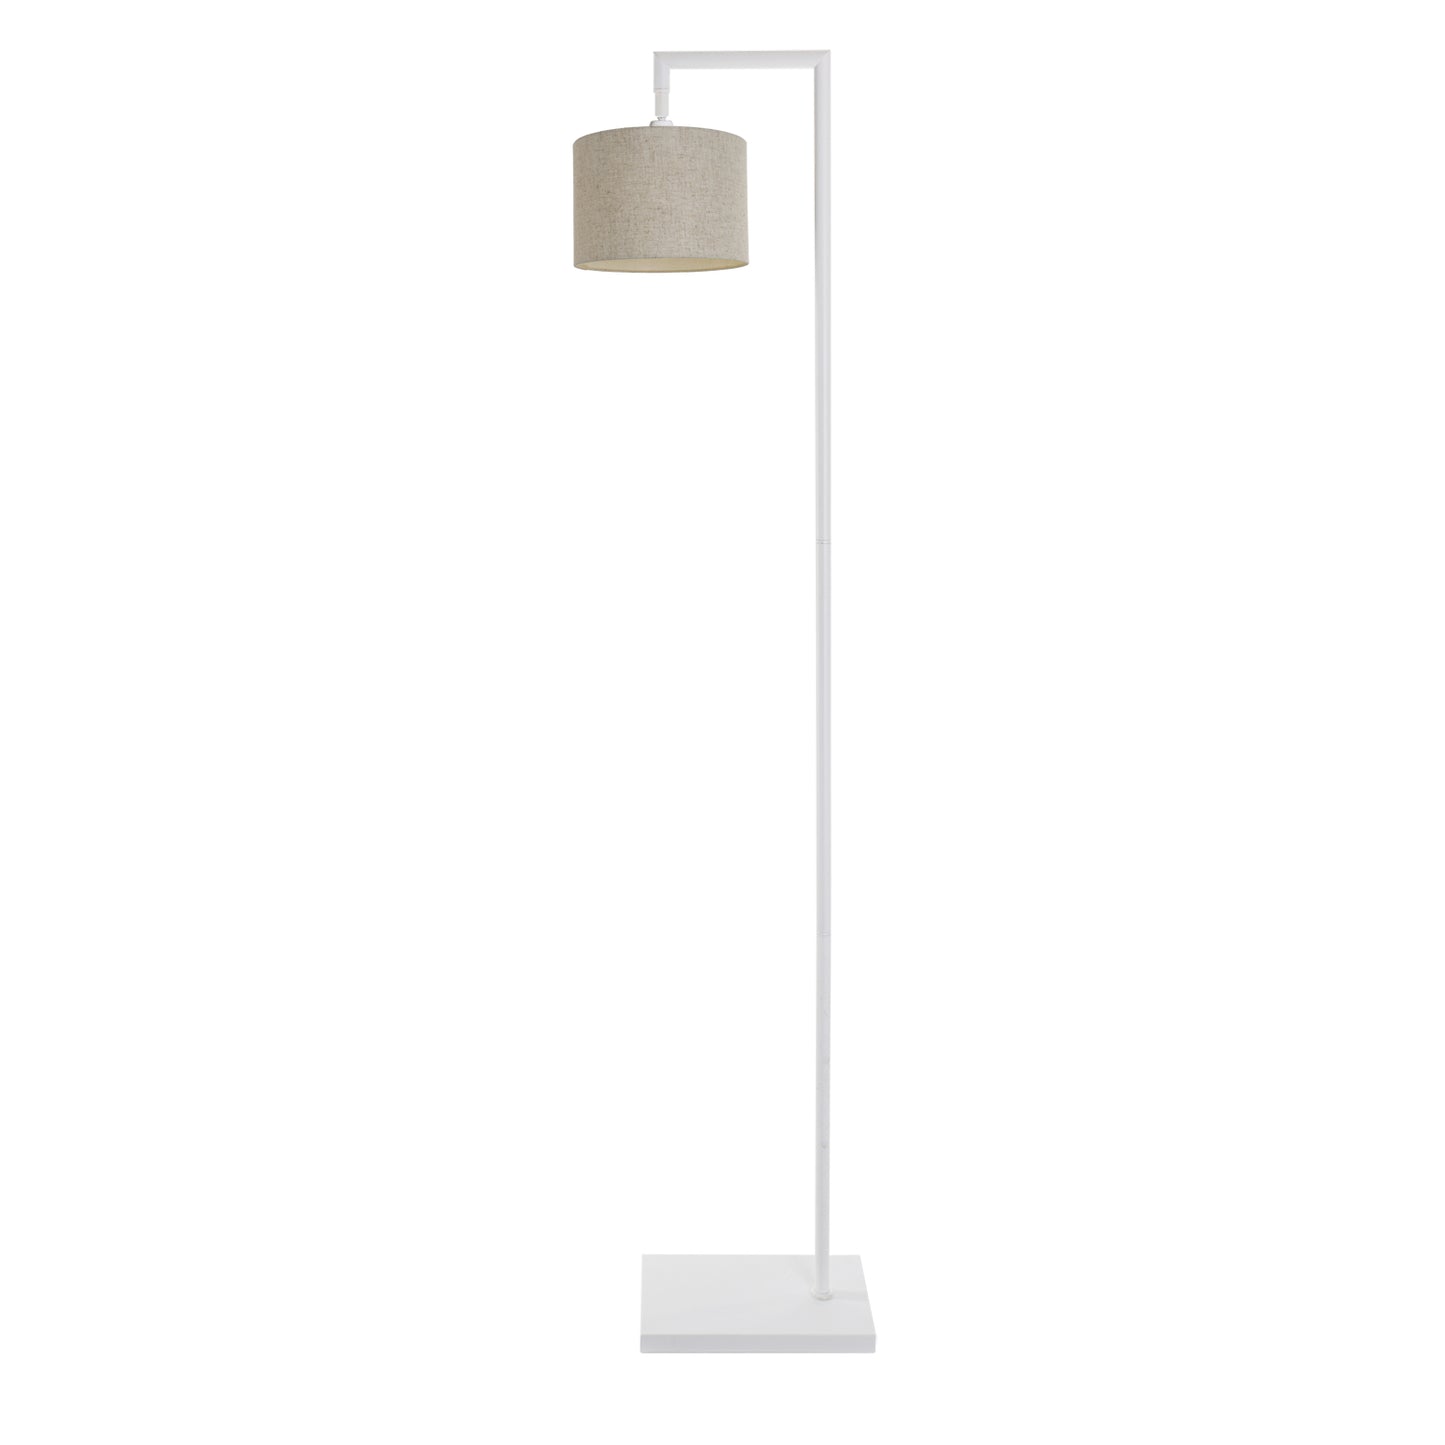 Murano White Floor Lamp with Woven Small Hand Made fabric Shade